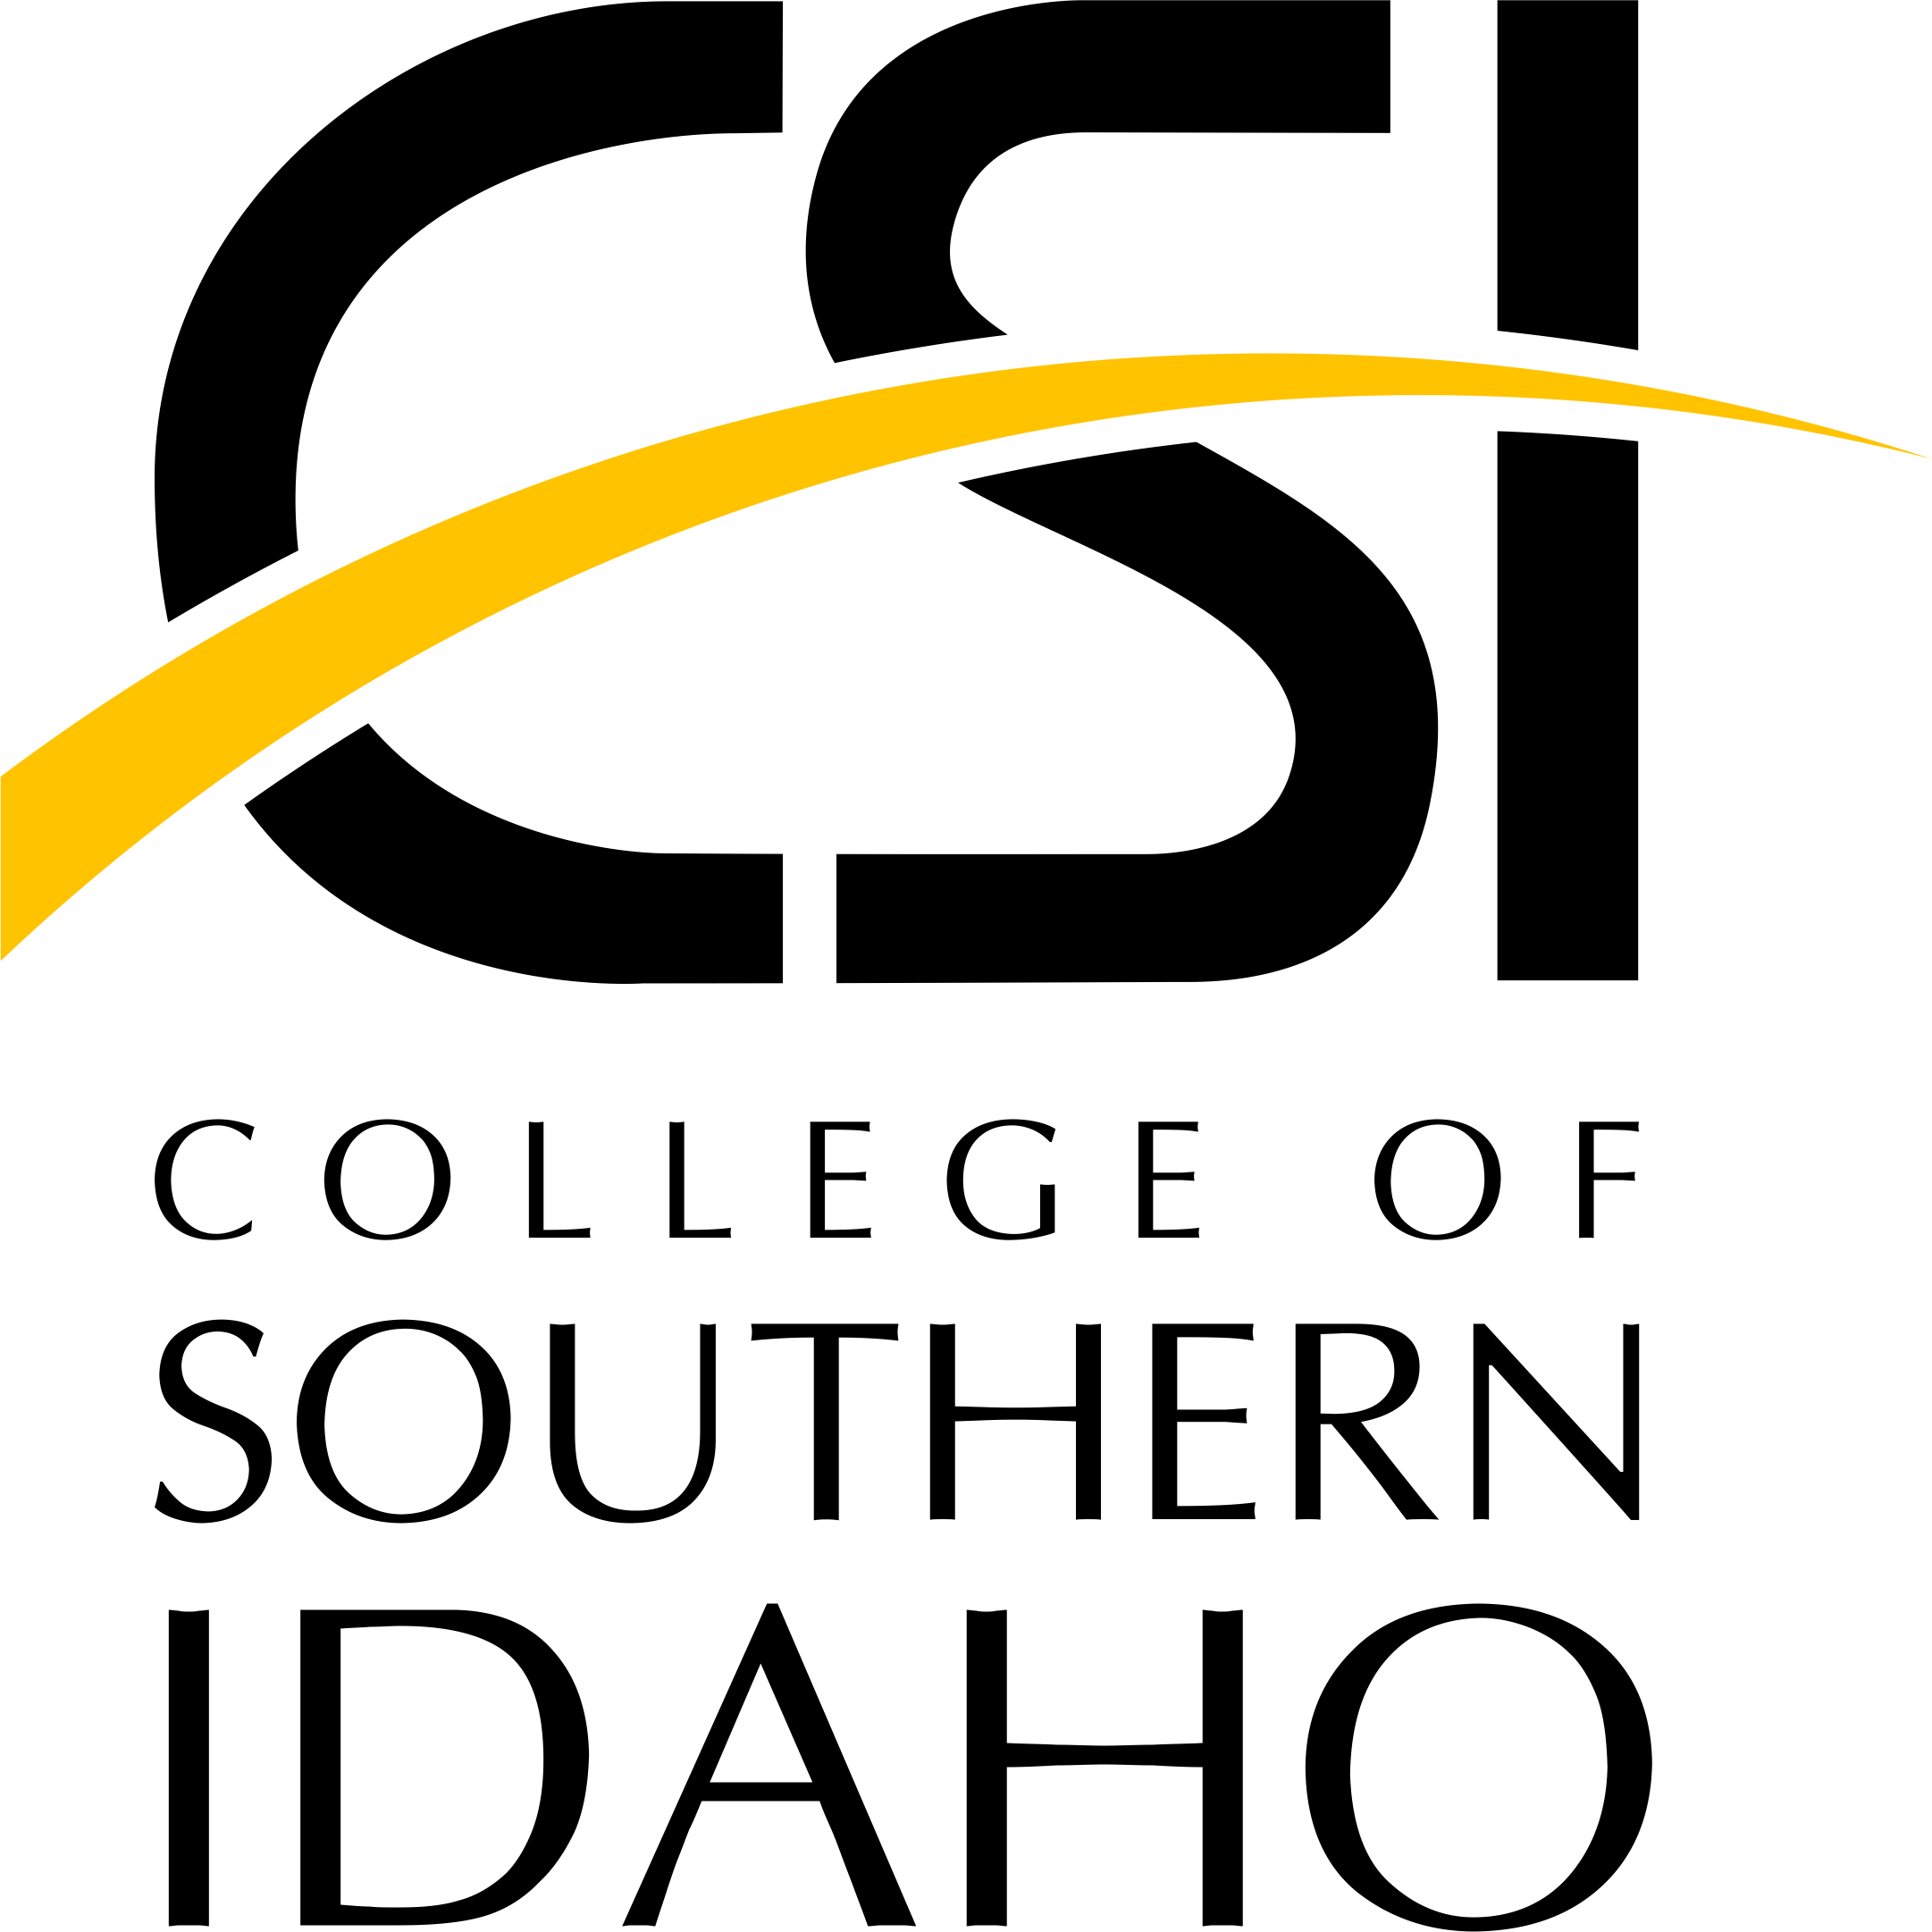 Idaho Logo - Public Information Office - Downloadable Files